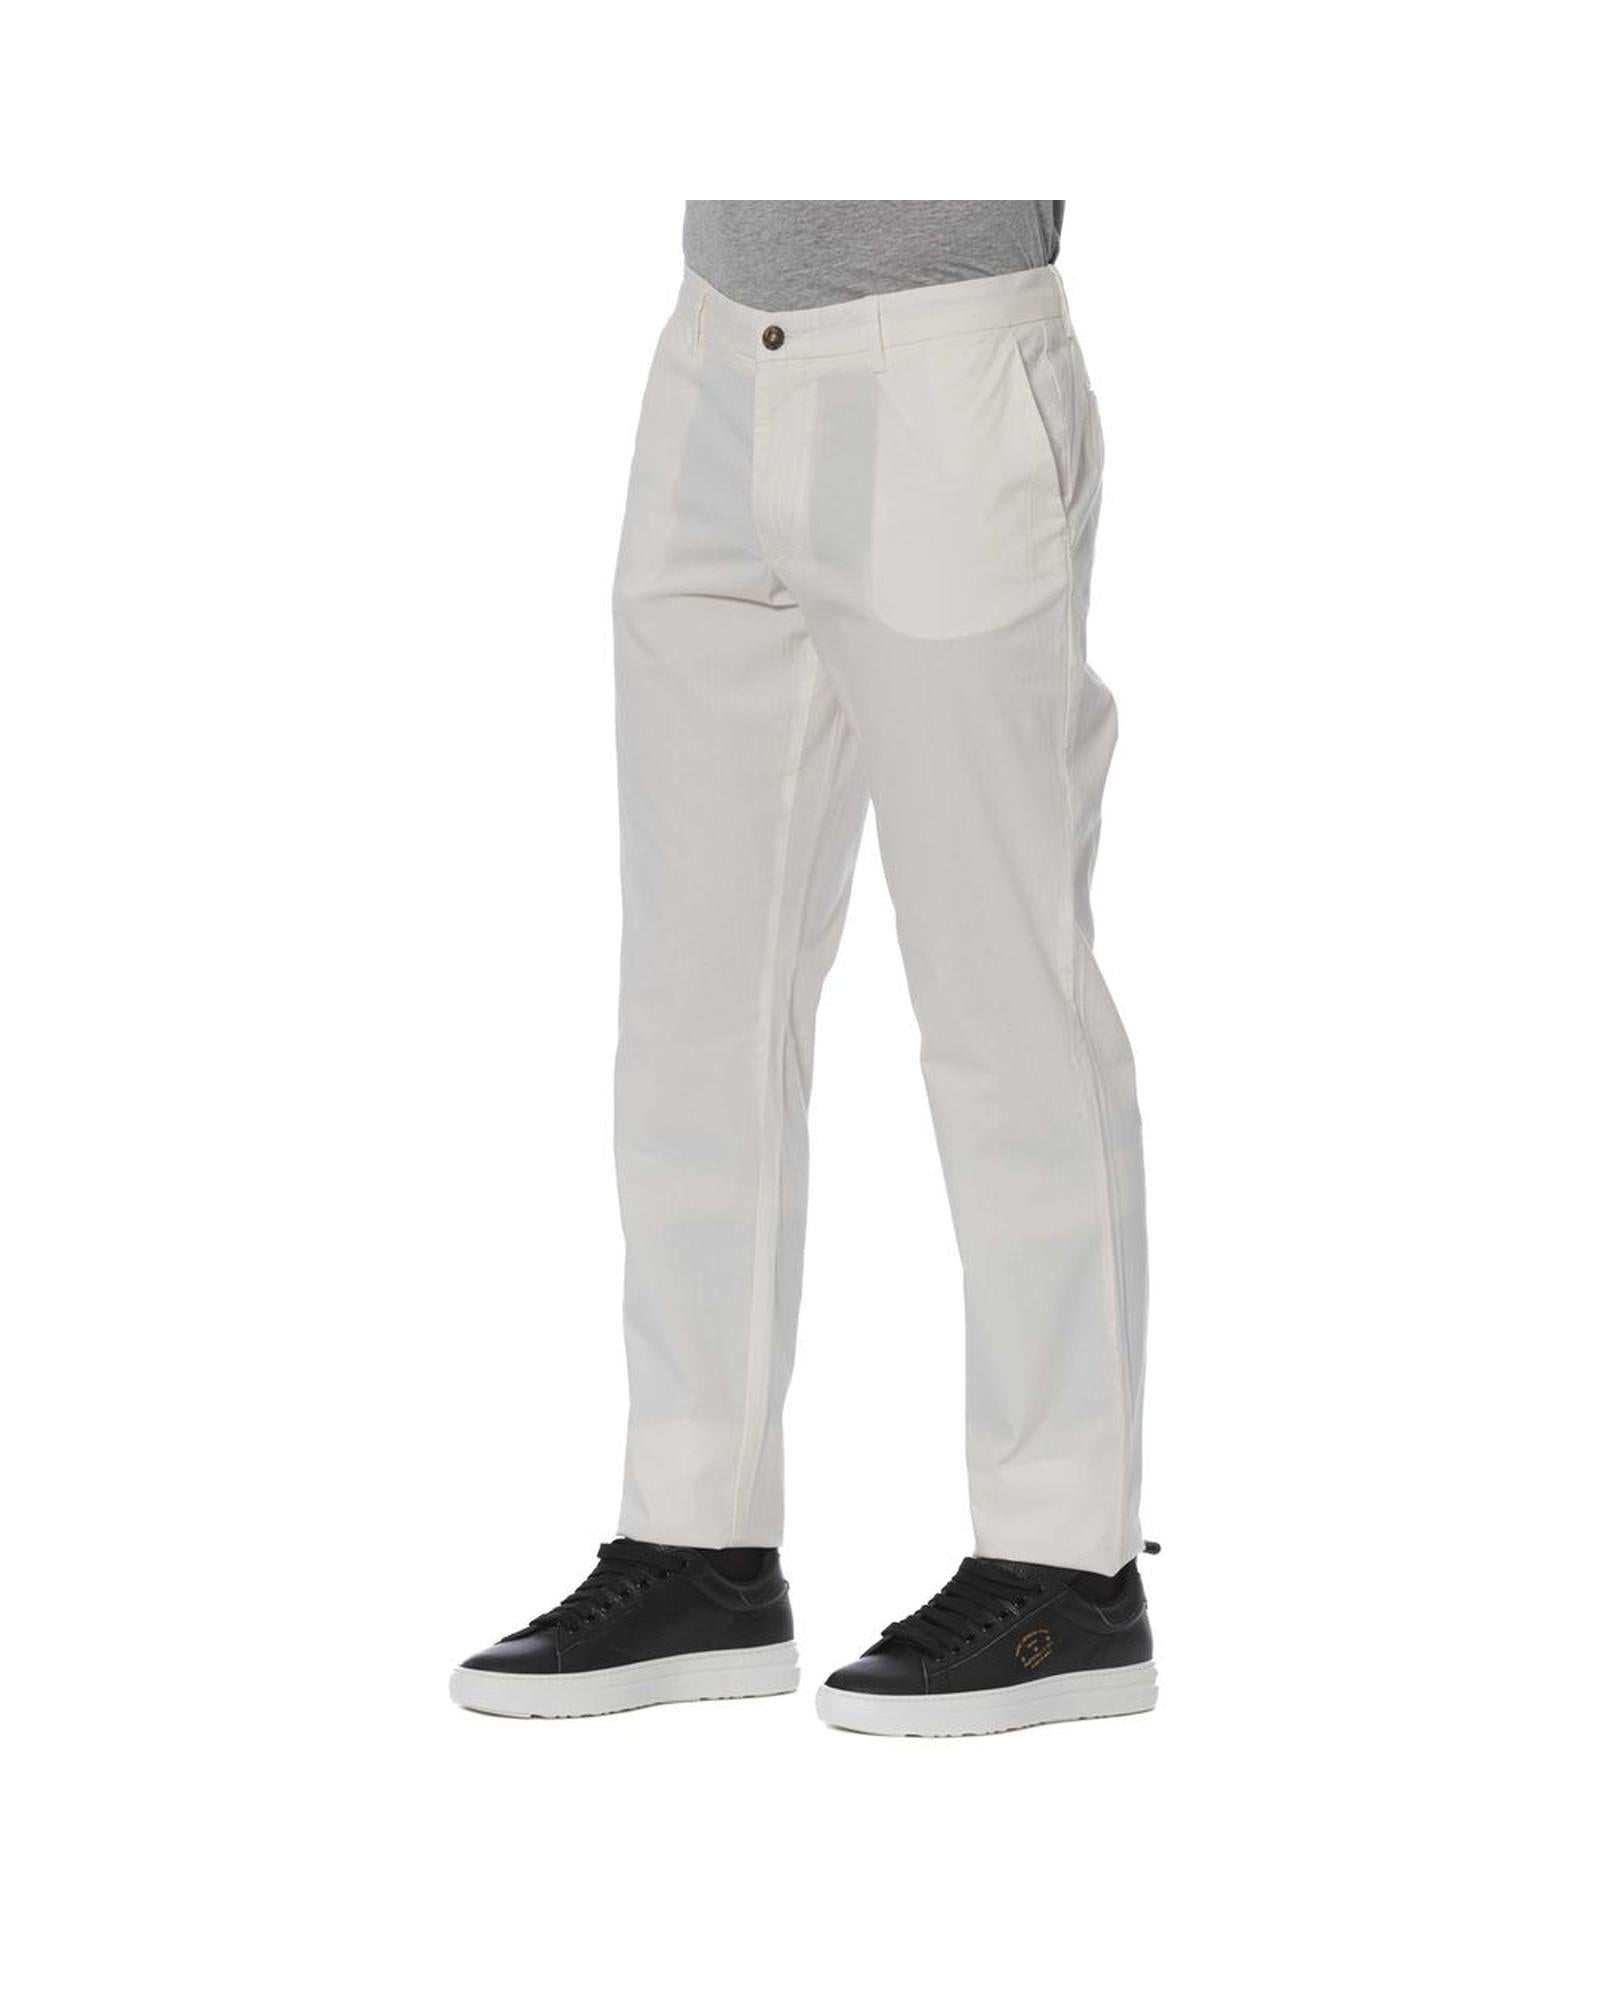 Men's White Cotton Jeans & Pant - W50 US